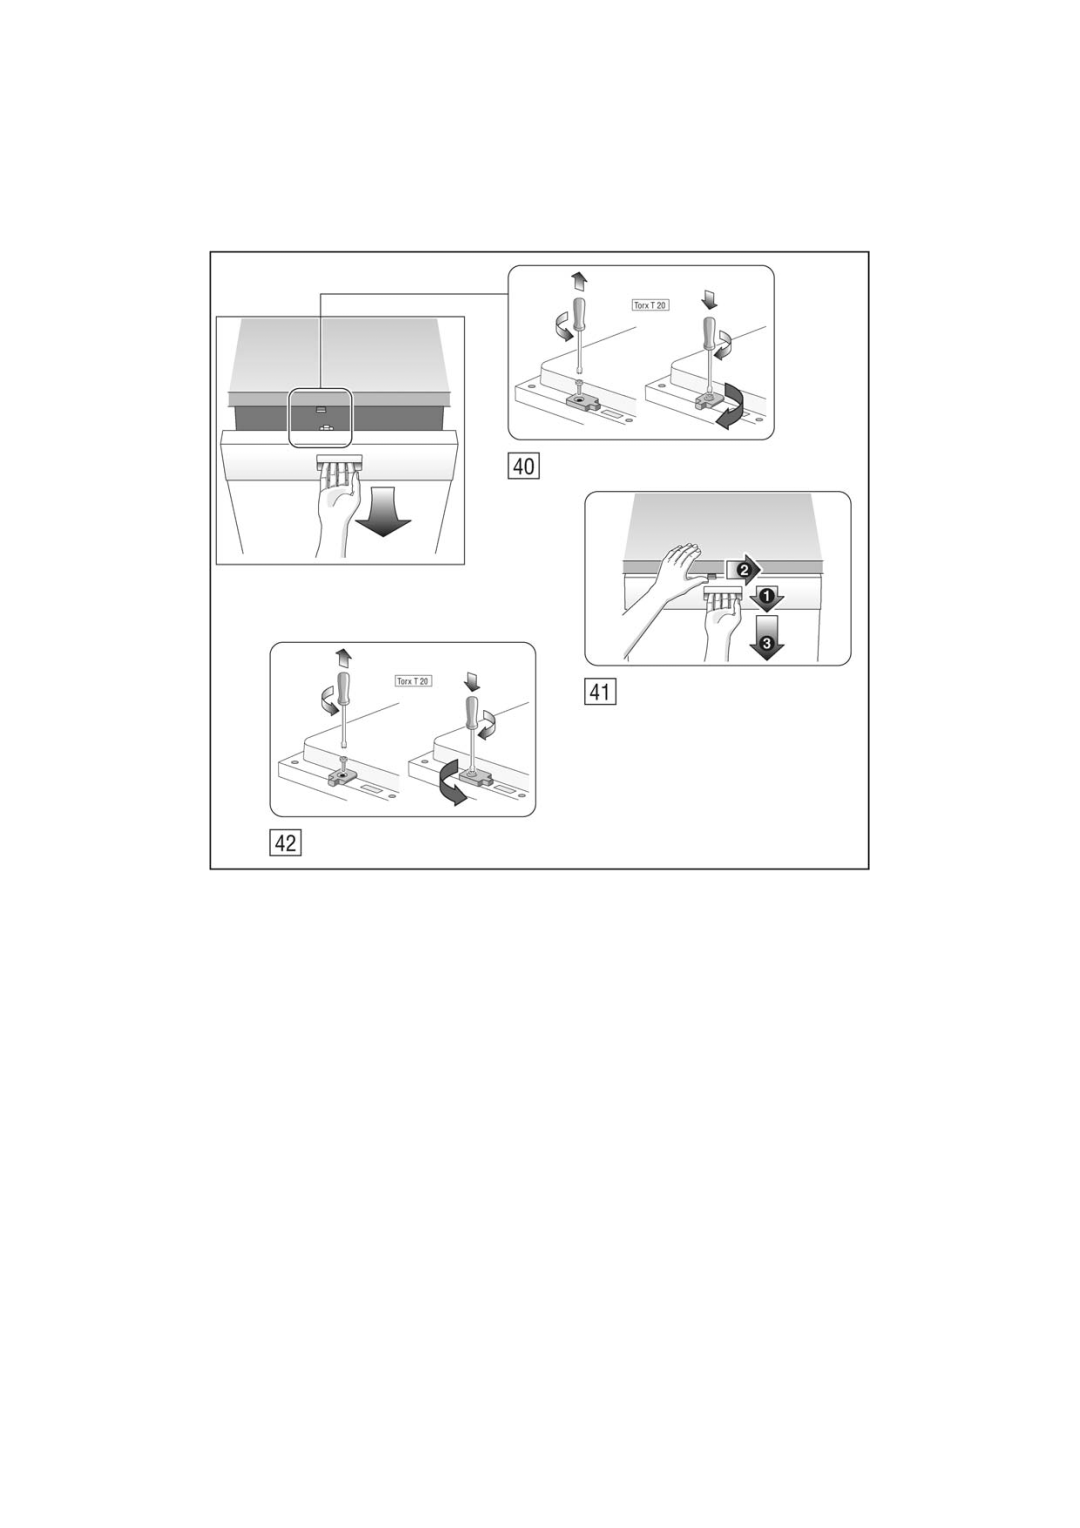 Bosch Appliances 9000 035918 (8406 0) manual 